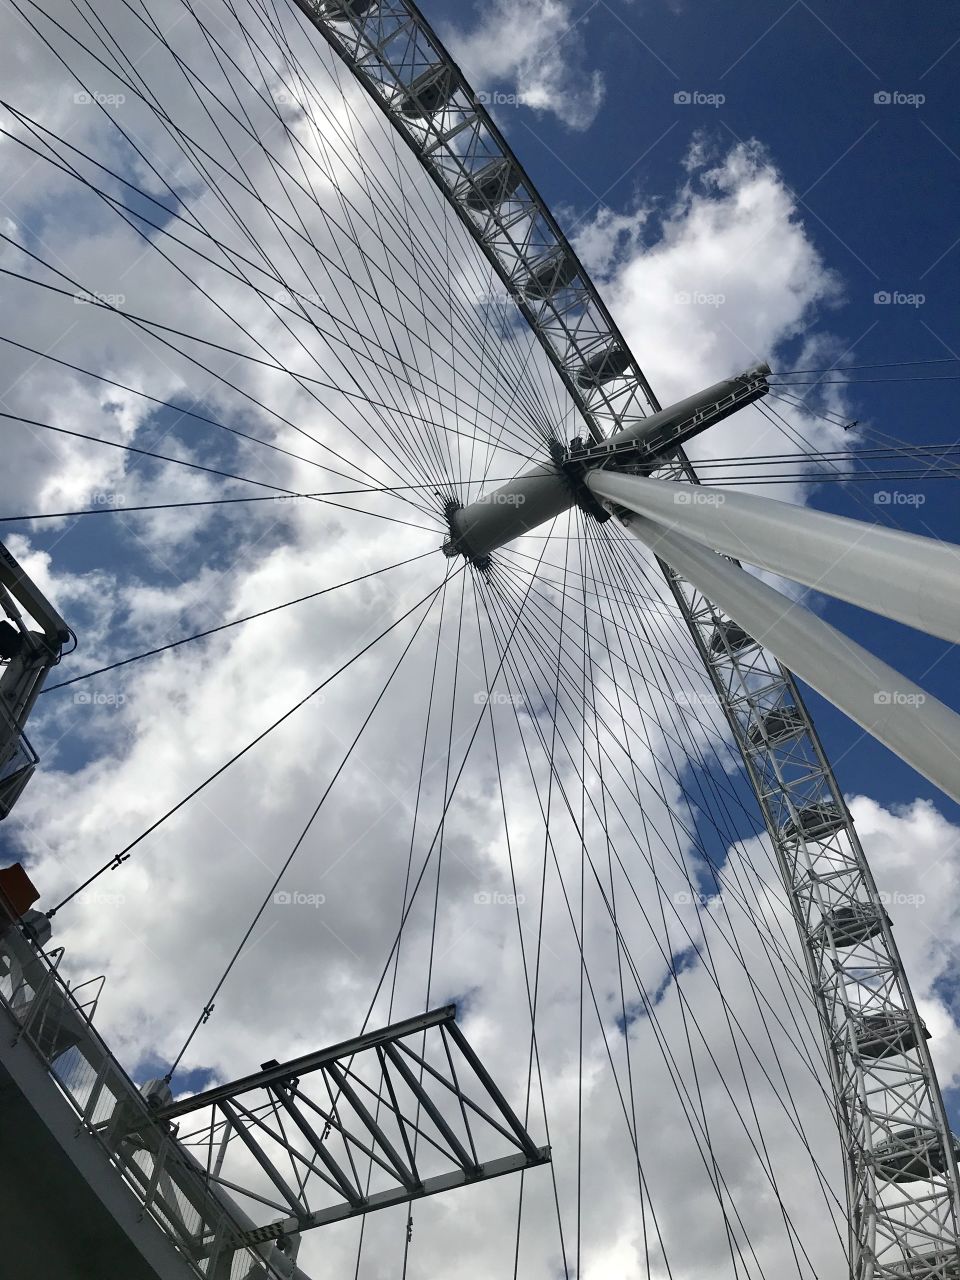 London Eye!